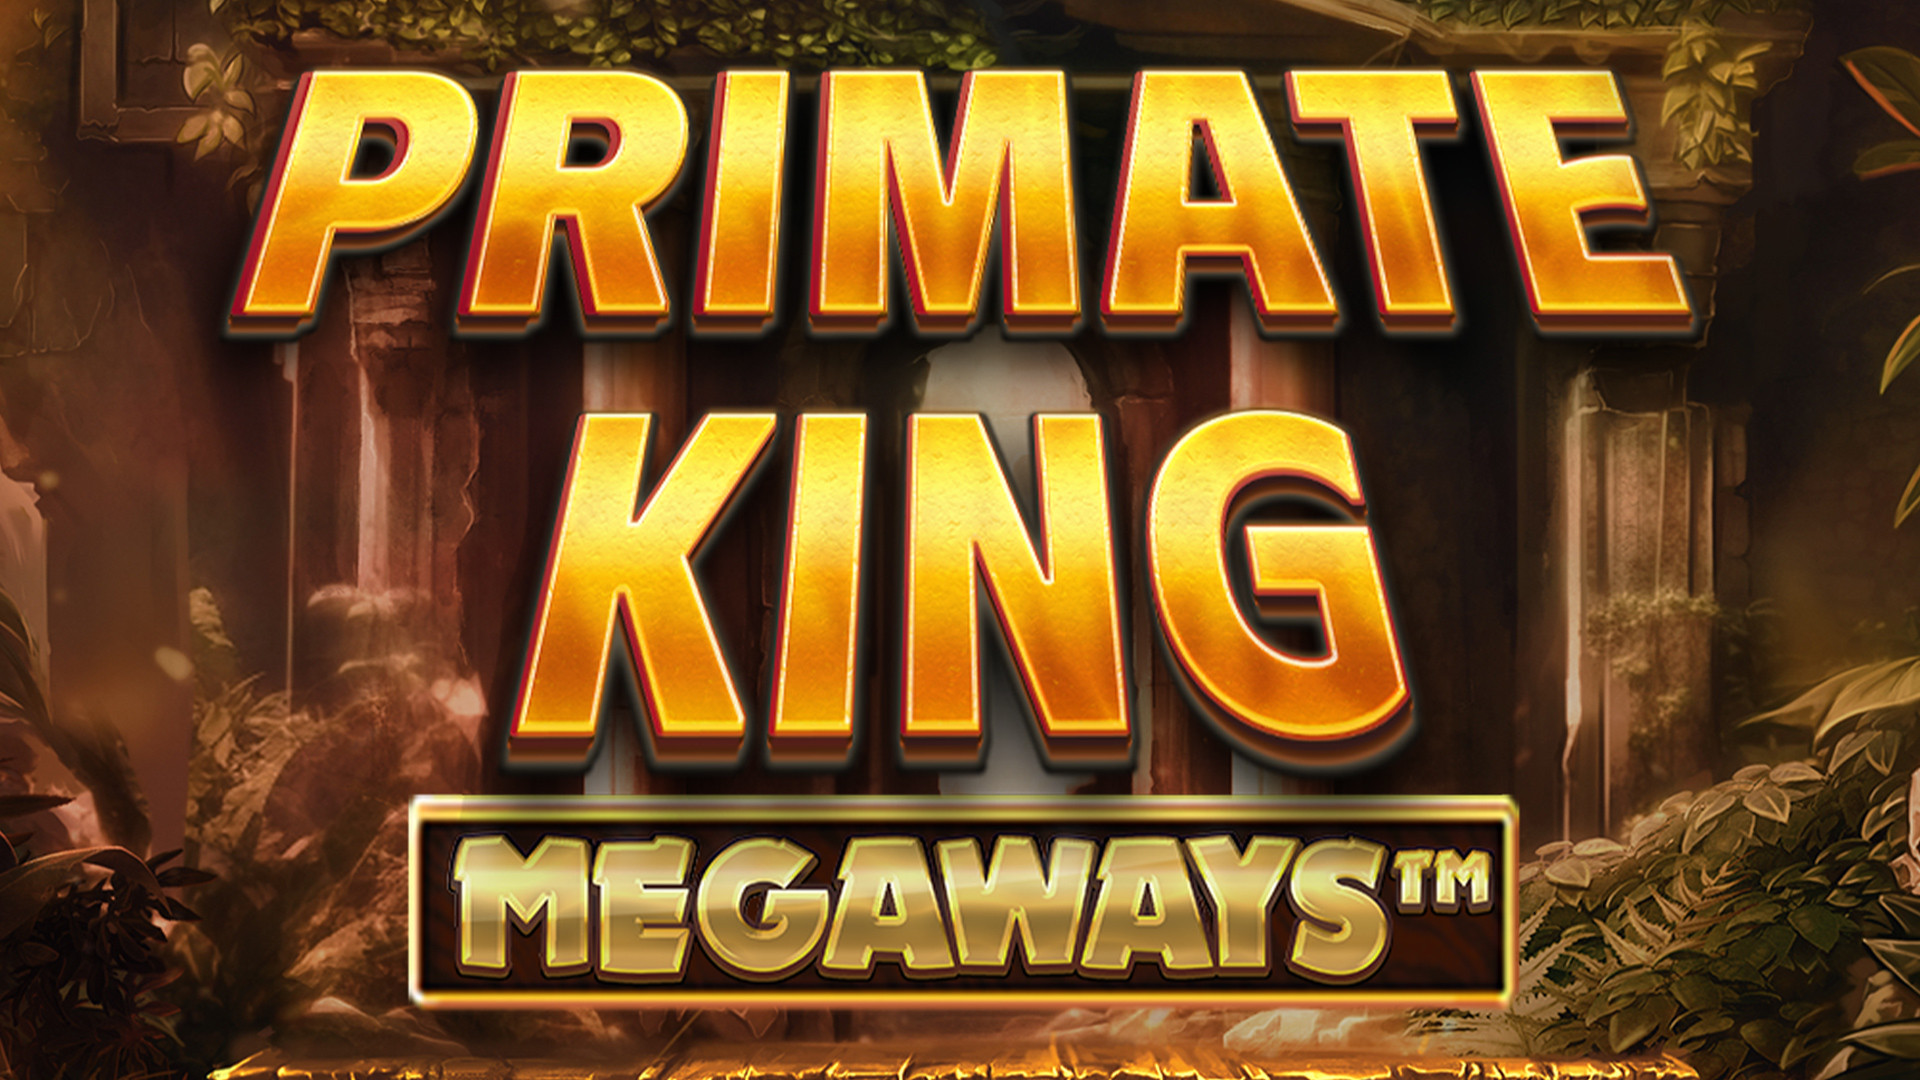 Primate King MEGAWAYS